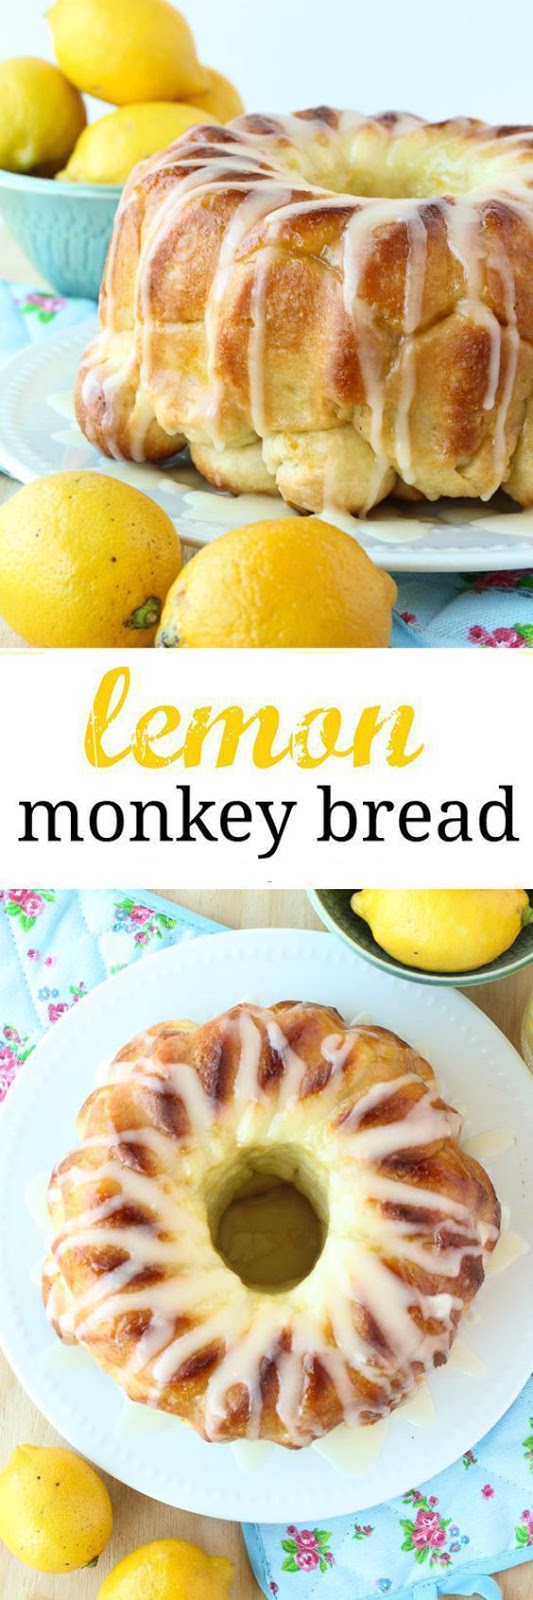 Glazed Lemon Monkey Bread